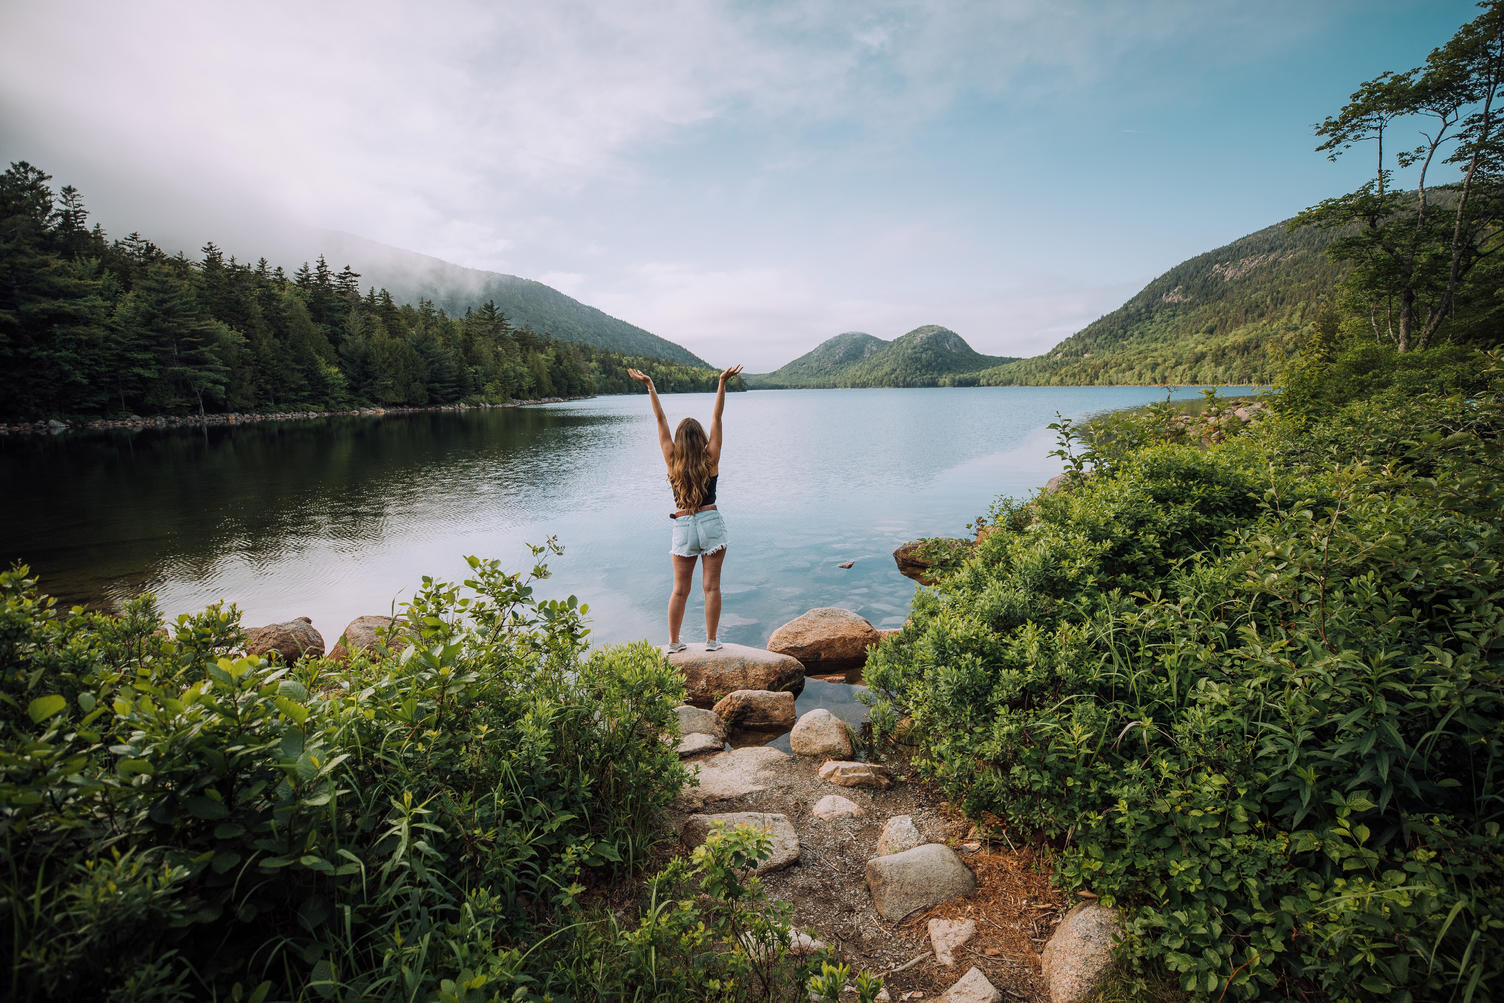 Maine—an adventure outdoors